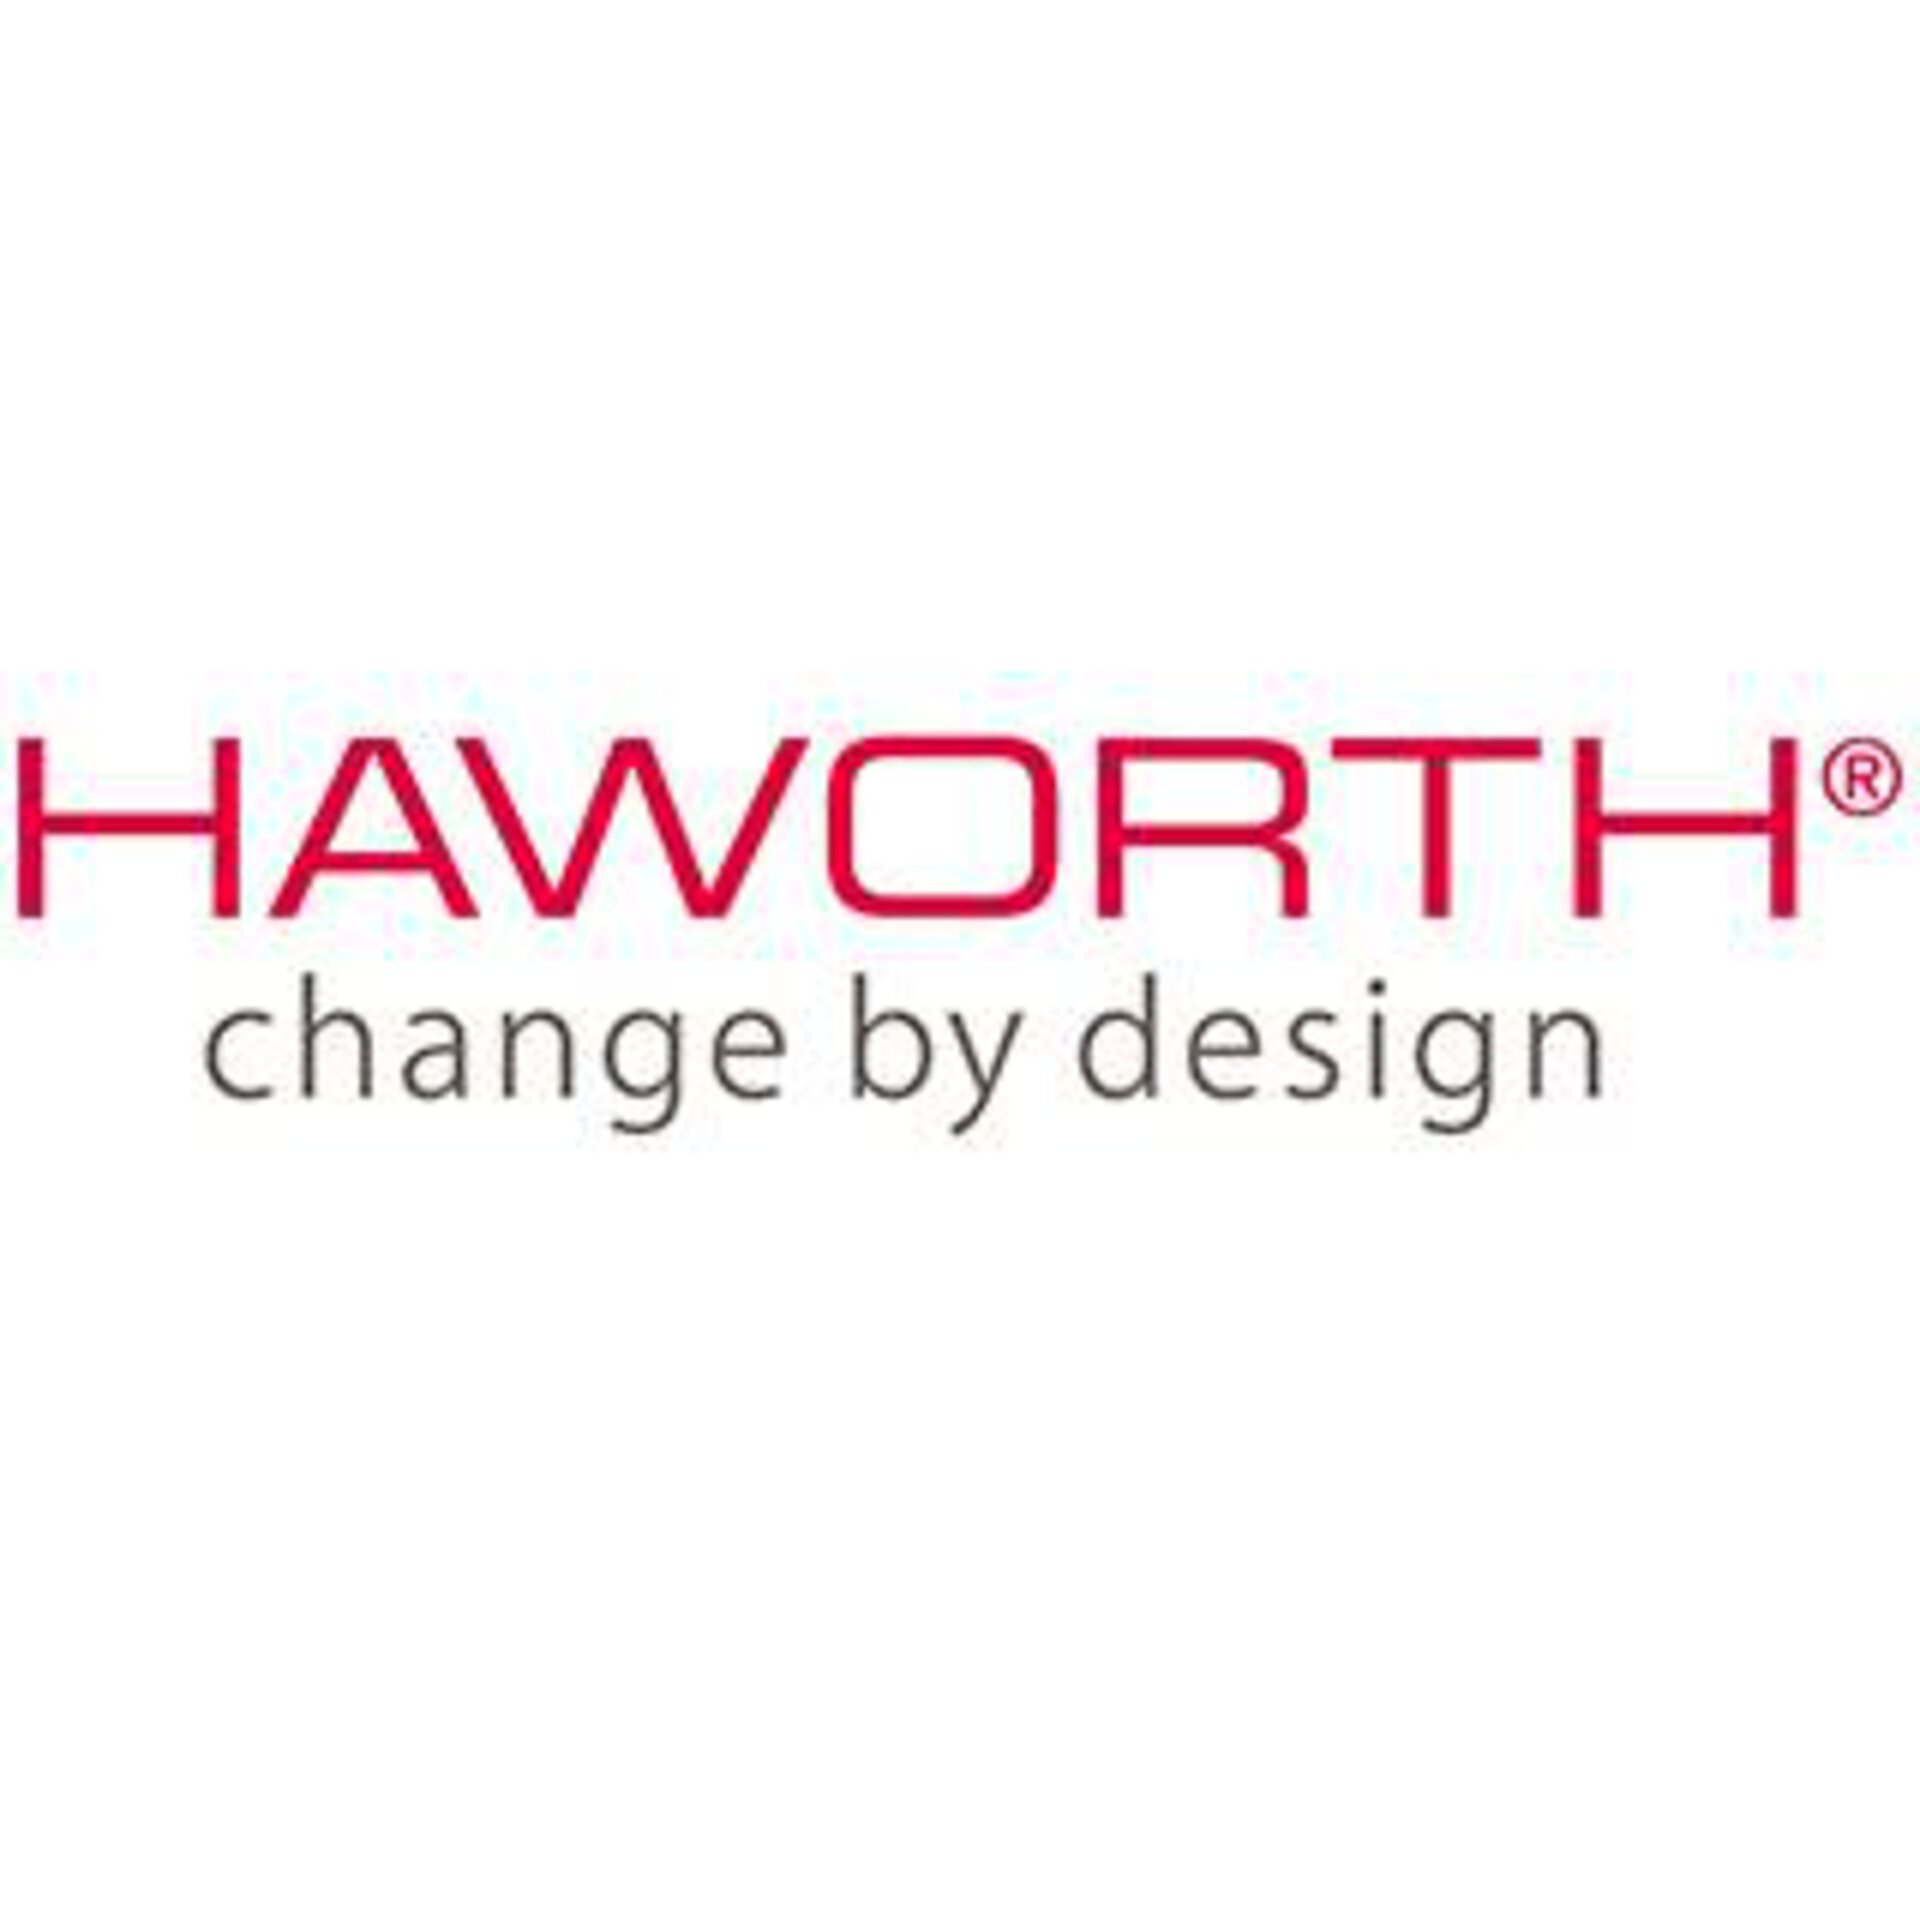 Logo HAWORTH change by design"